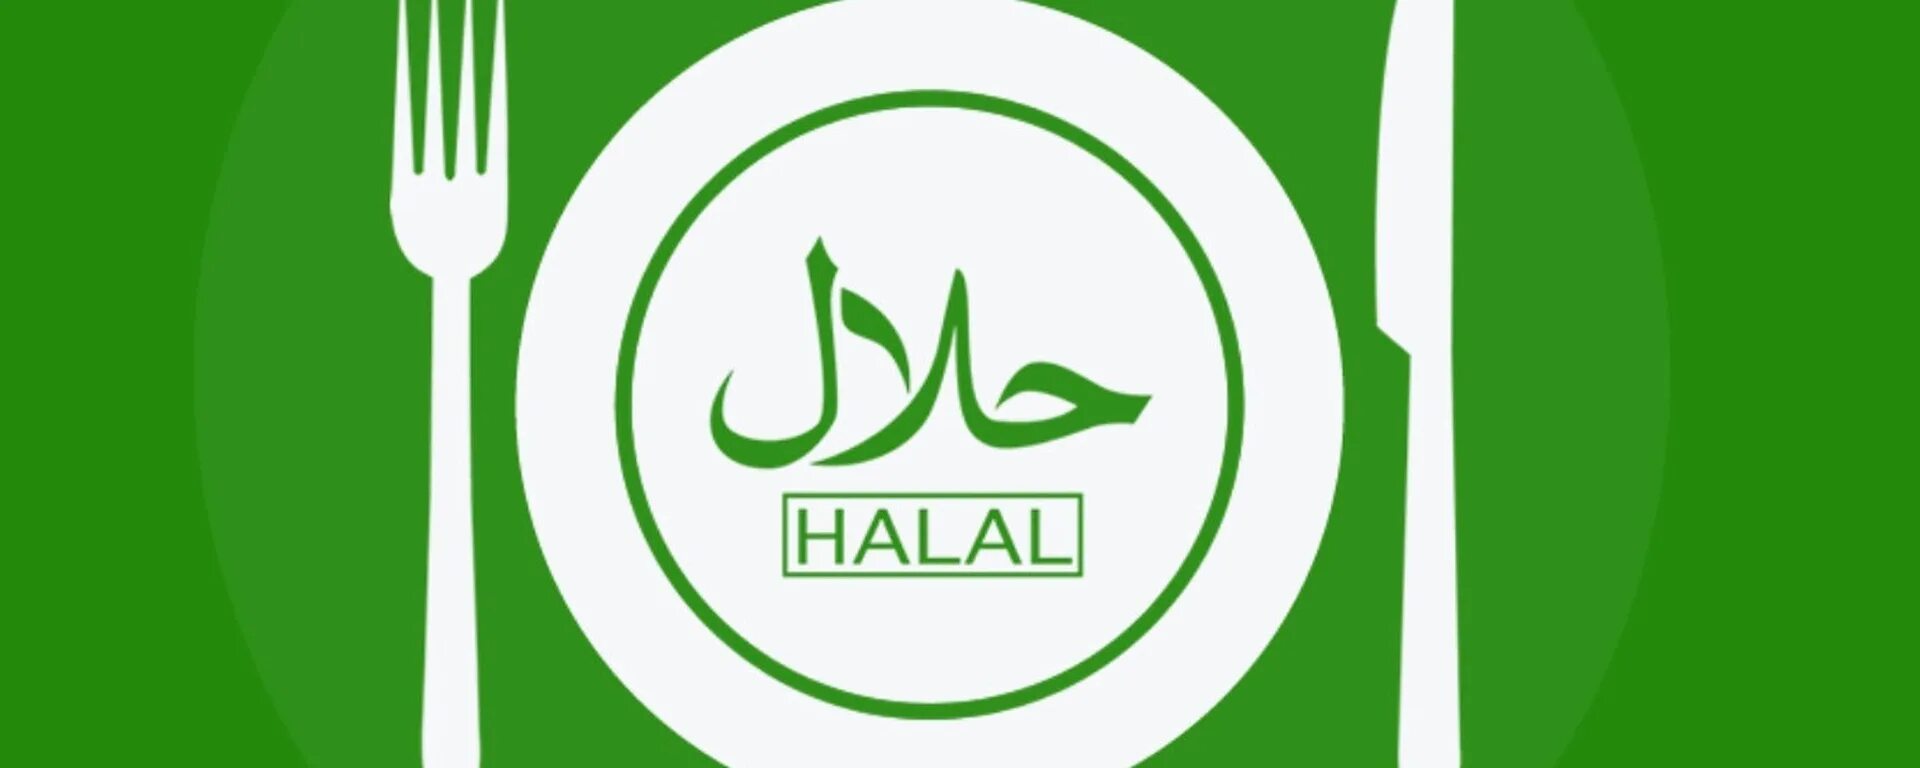 Халяль. Эмблема Халяль. Логотип кафе Халяль. Значок Халяль зеленый.